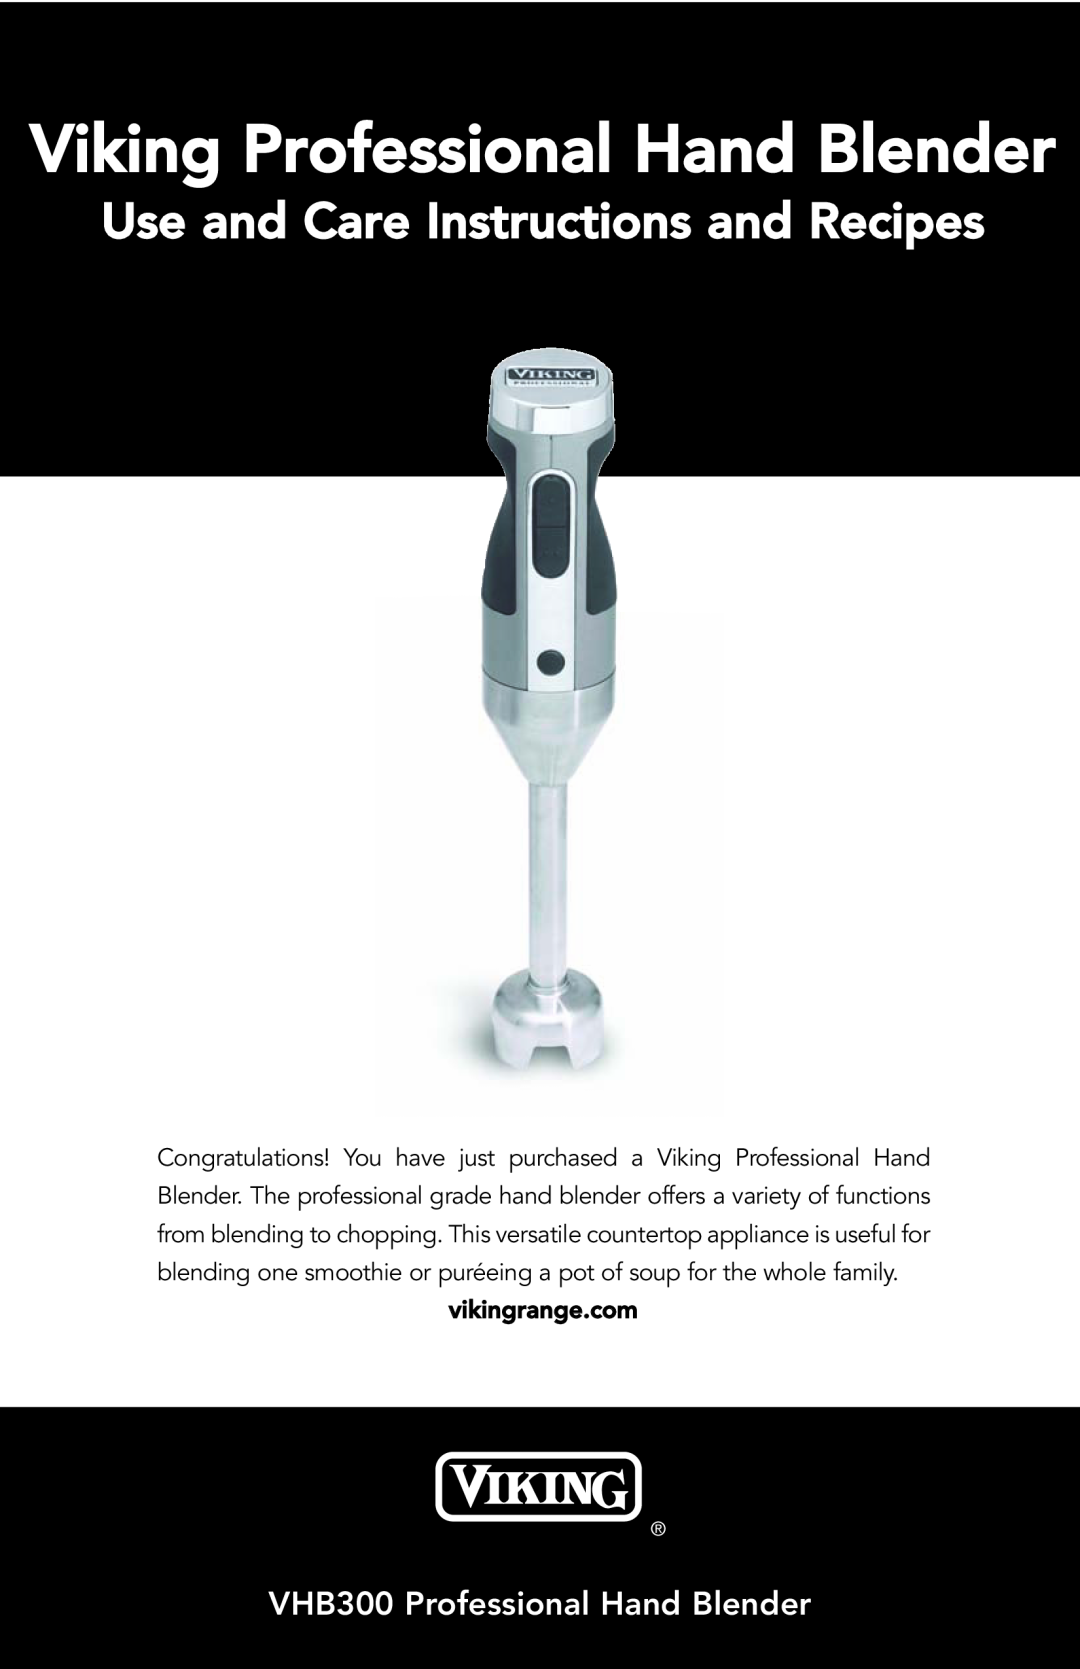 Viking VHB300 manual Viking Professional Hand Blender, Use and Care Instructions and Recipes, vikingrange.com 